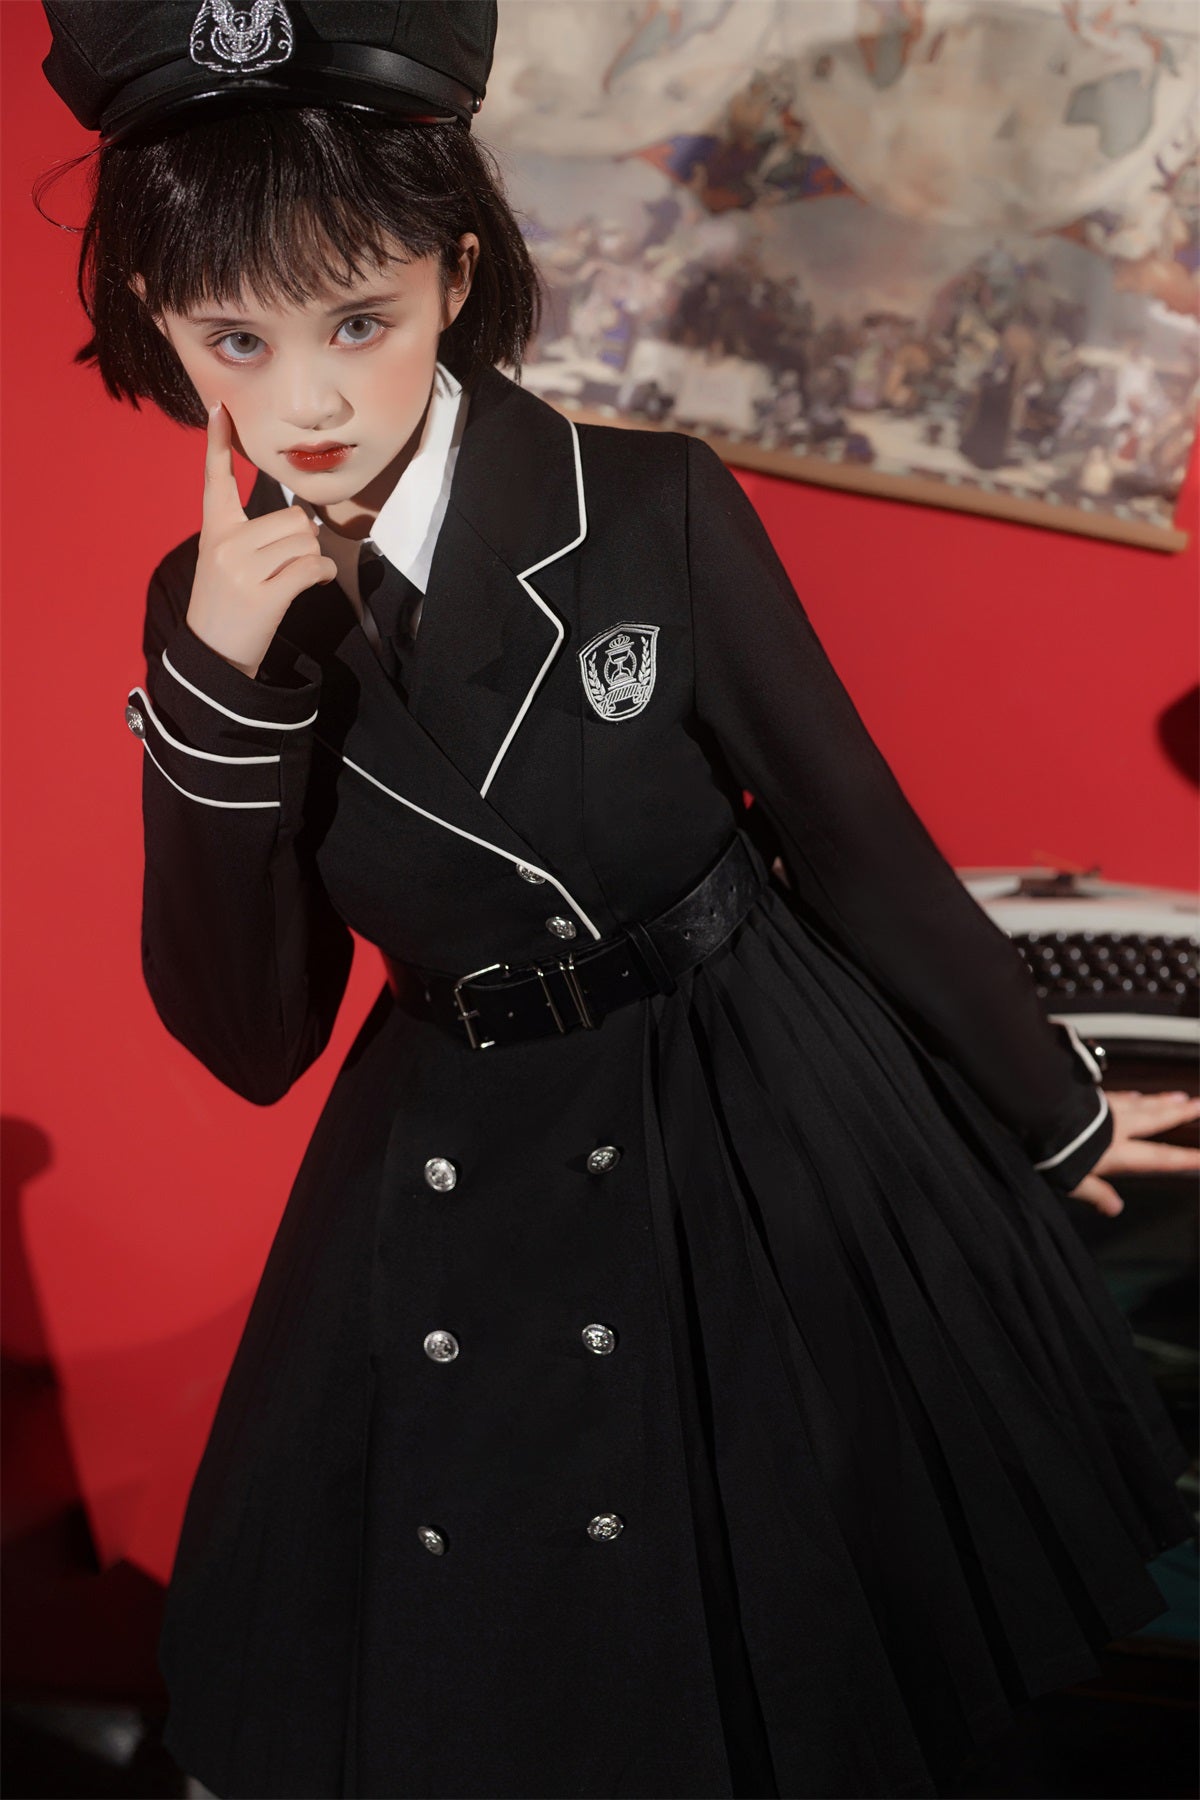 Military Lolita uniform style metal button dress